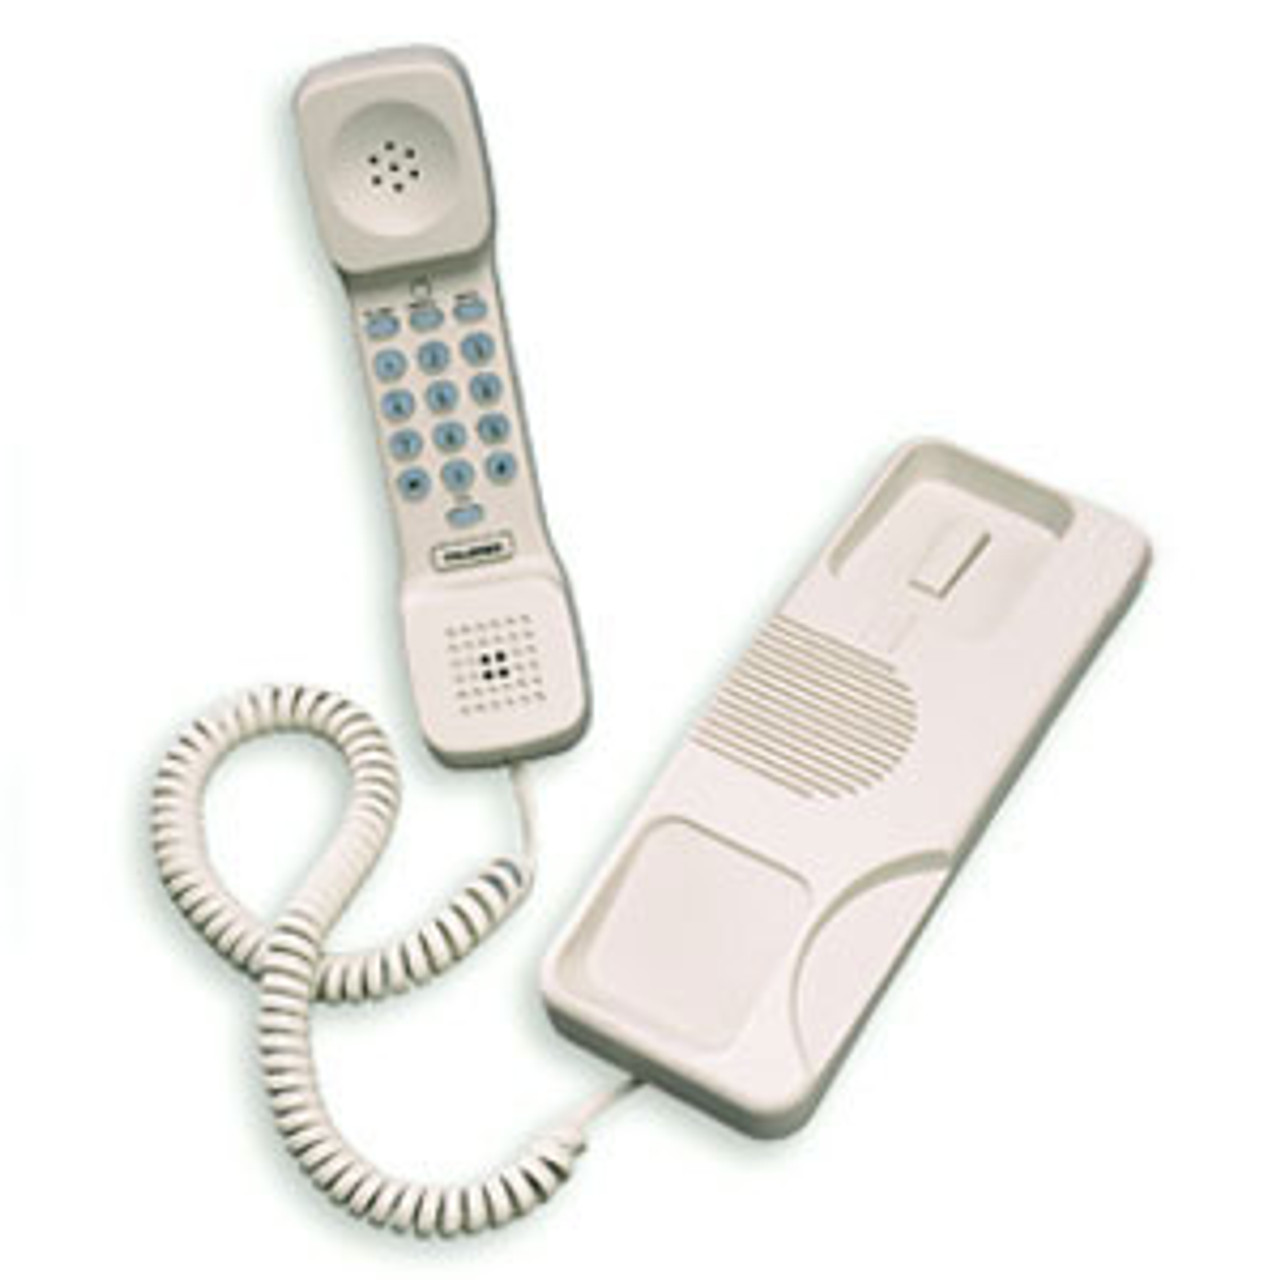 Teledex OPAL Trimline Guest Room Telephone